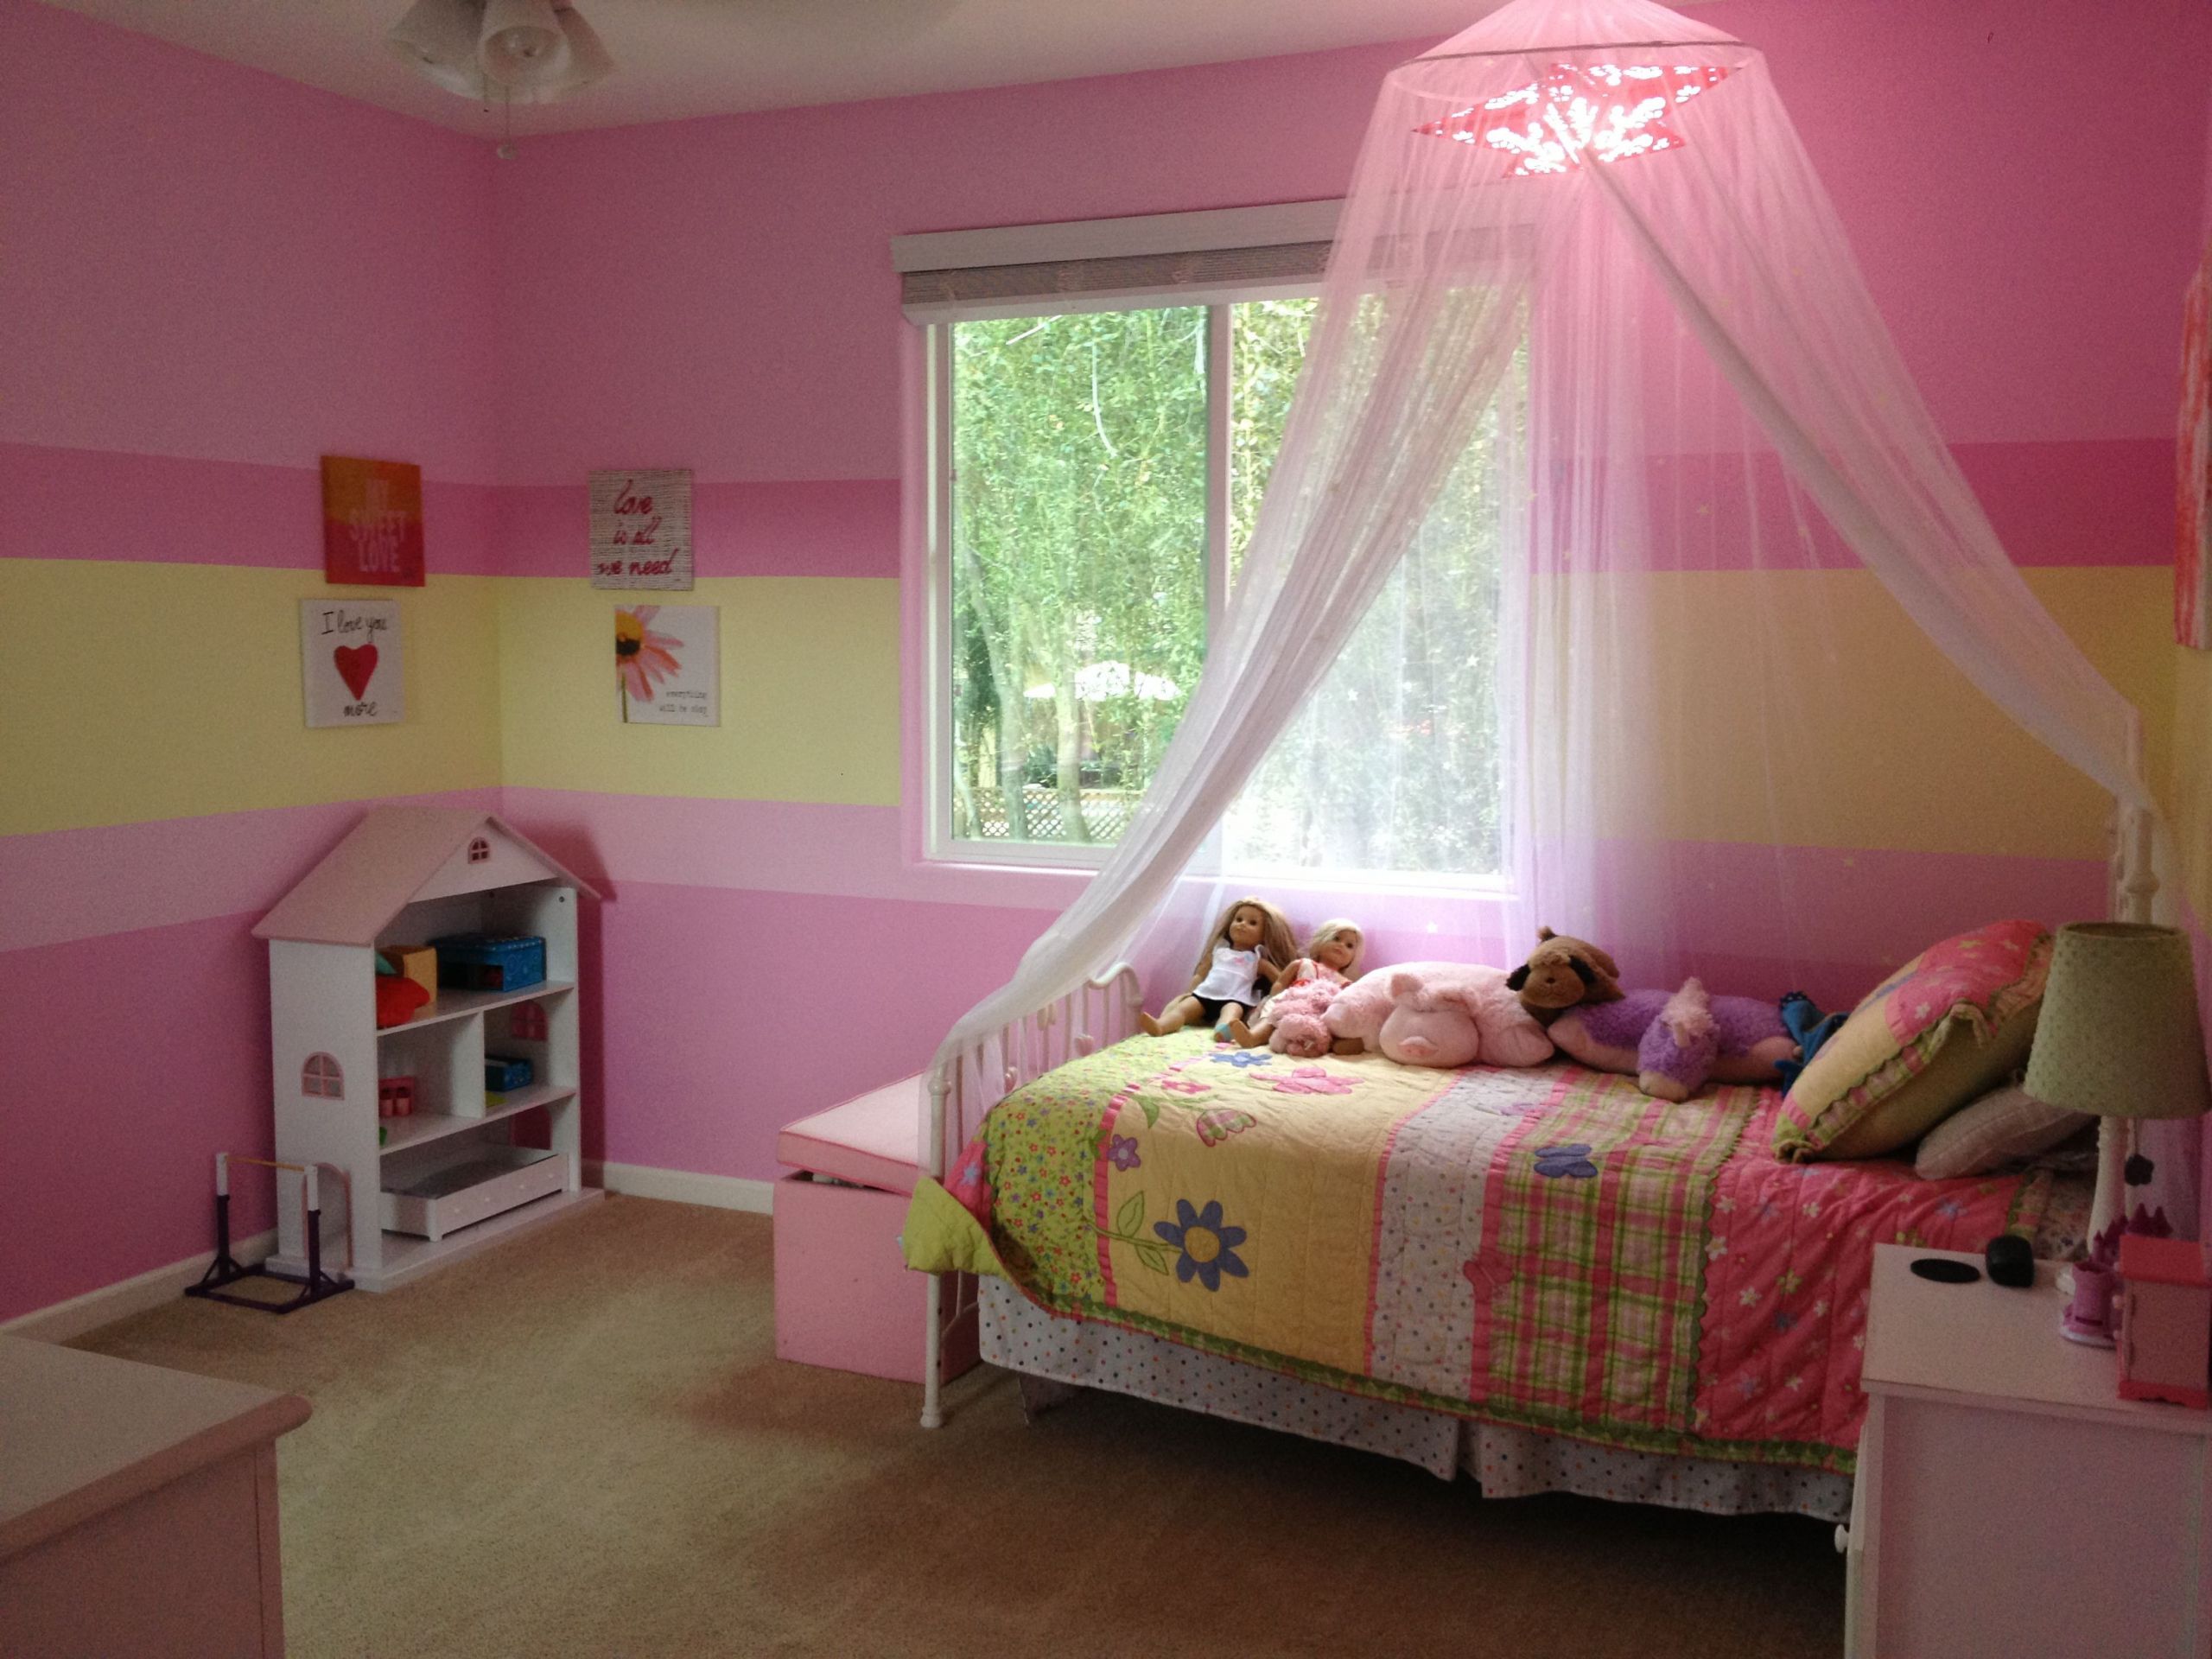 Painting Ideas For Girl Bedroom
 Best 25 Girl bedroom paint ideas on Pinterest